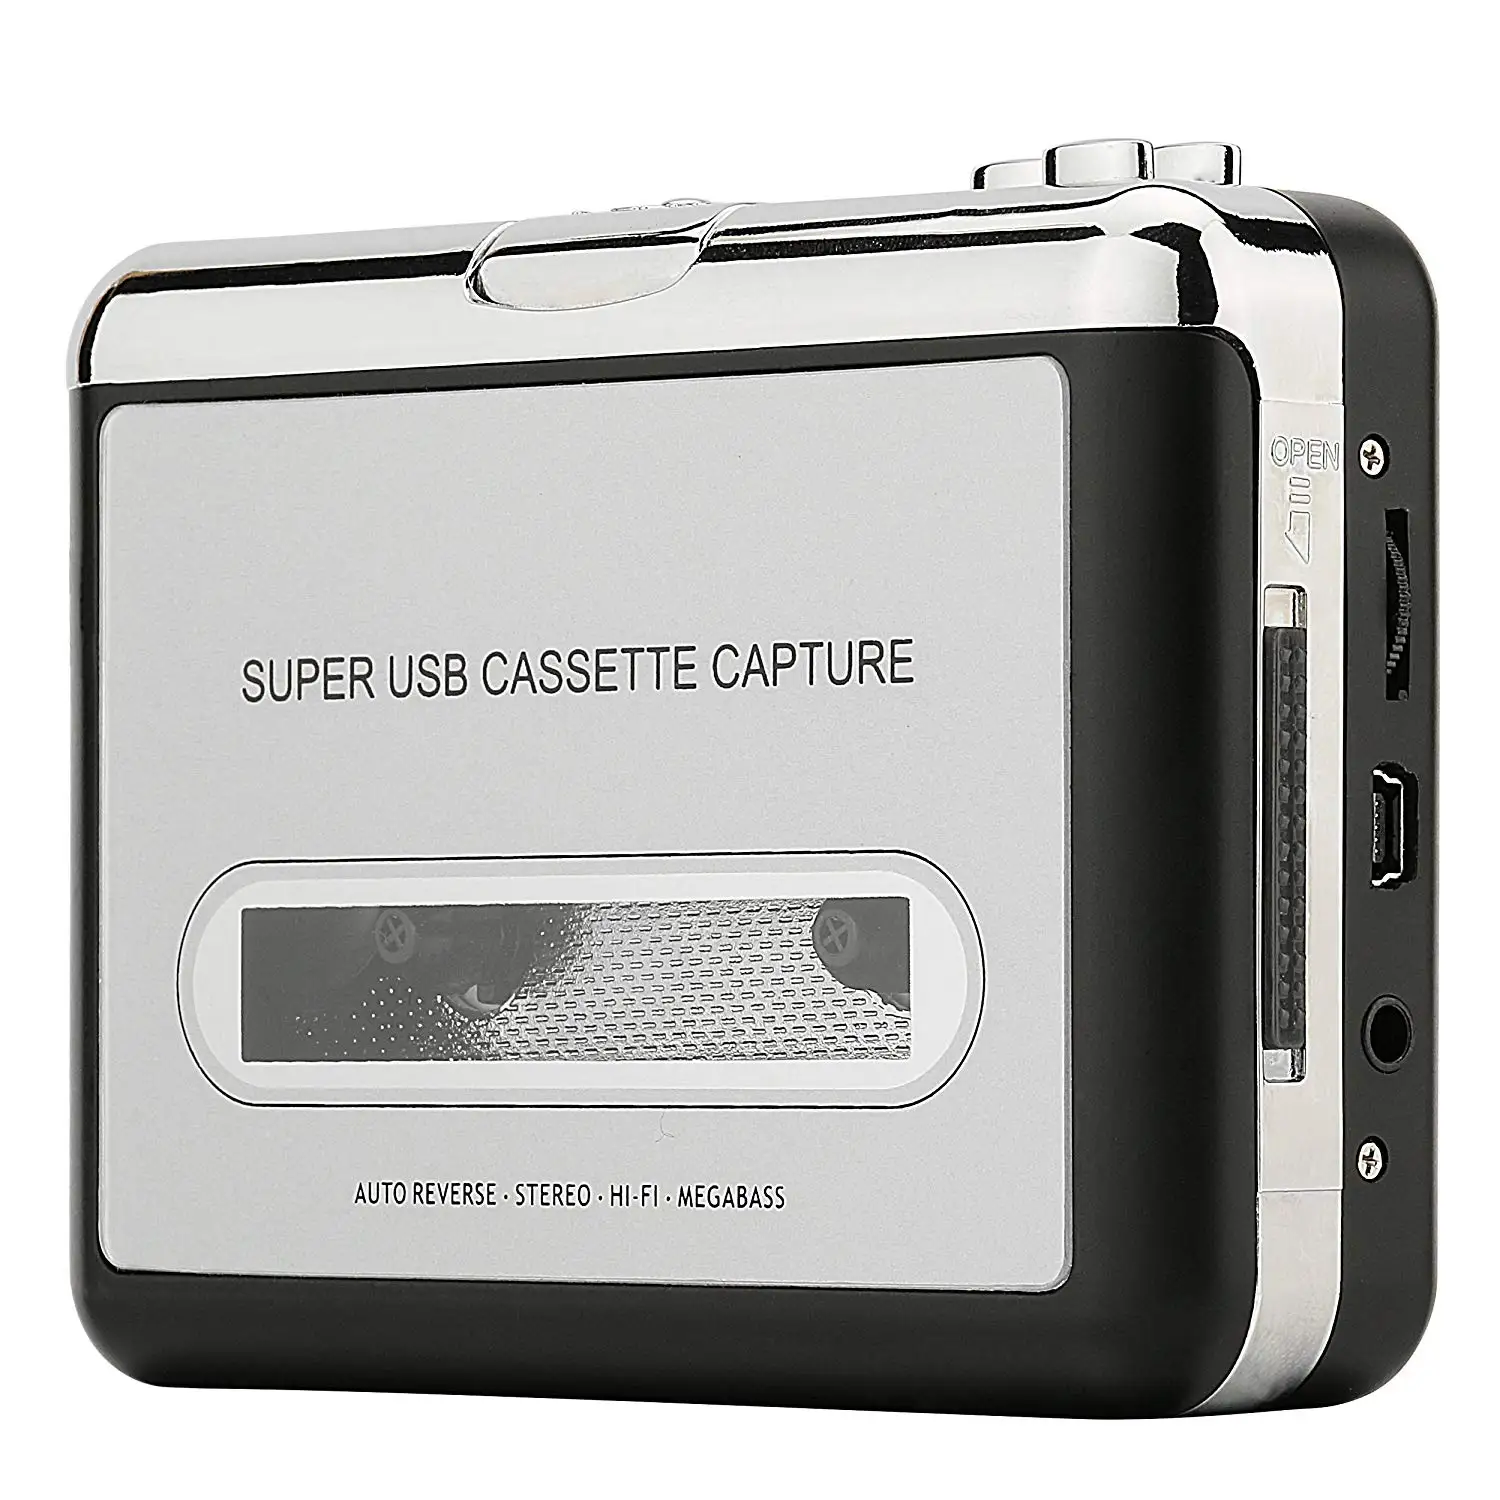 

Walkman Cassette Tape To MP3 CD Converter Via USB,Portable Cassette Tape Converter Captures MP3 Audio Music